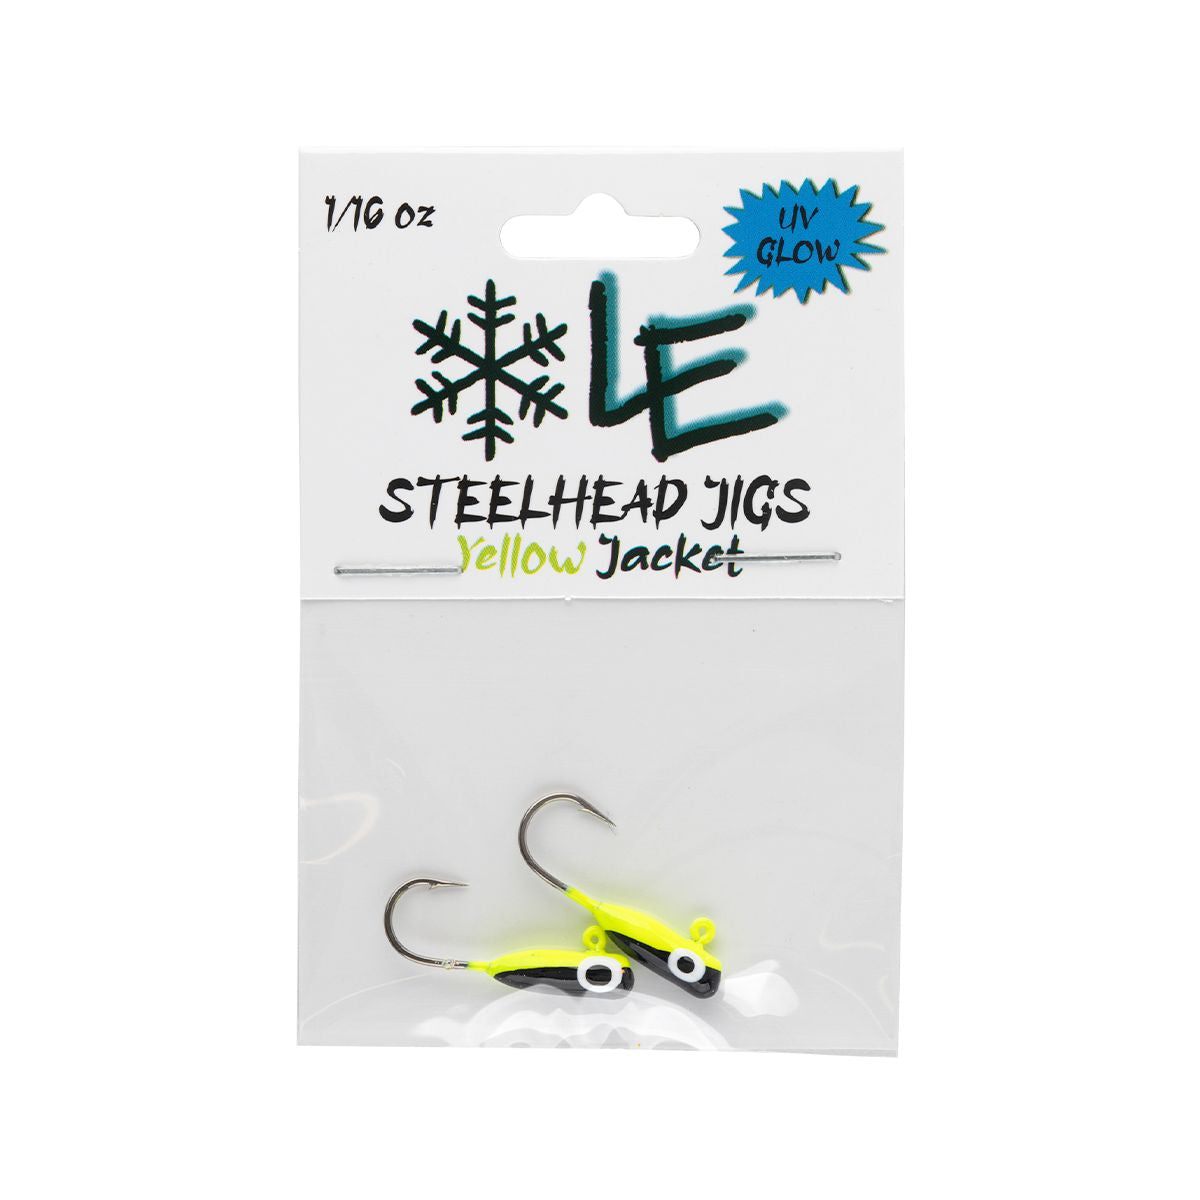 Yellow Jacket - Steelhead Jig 2 Pack! – RBM Jigs / Lake Effect Lure Co.